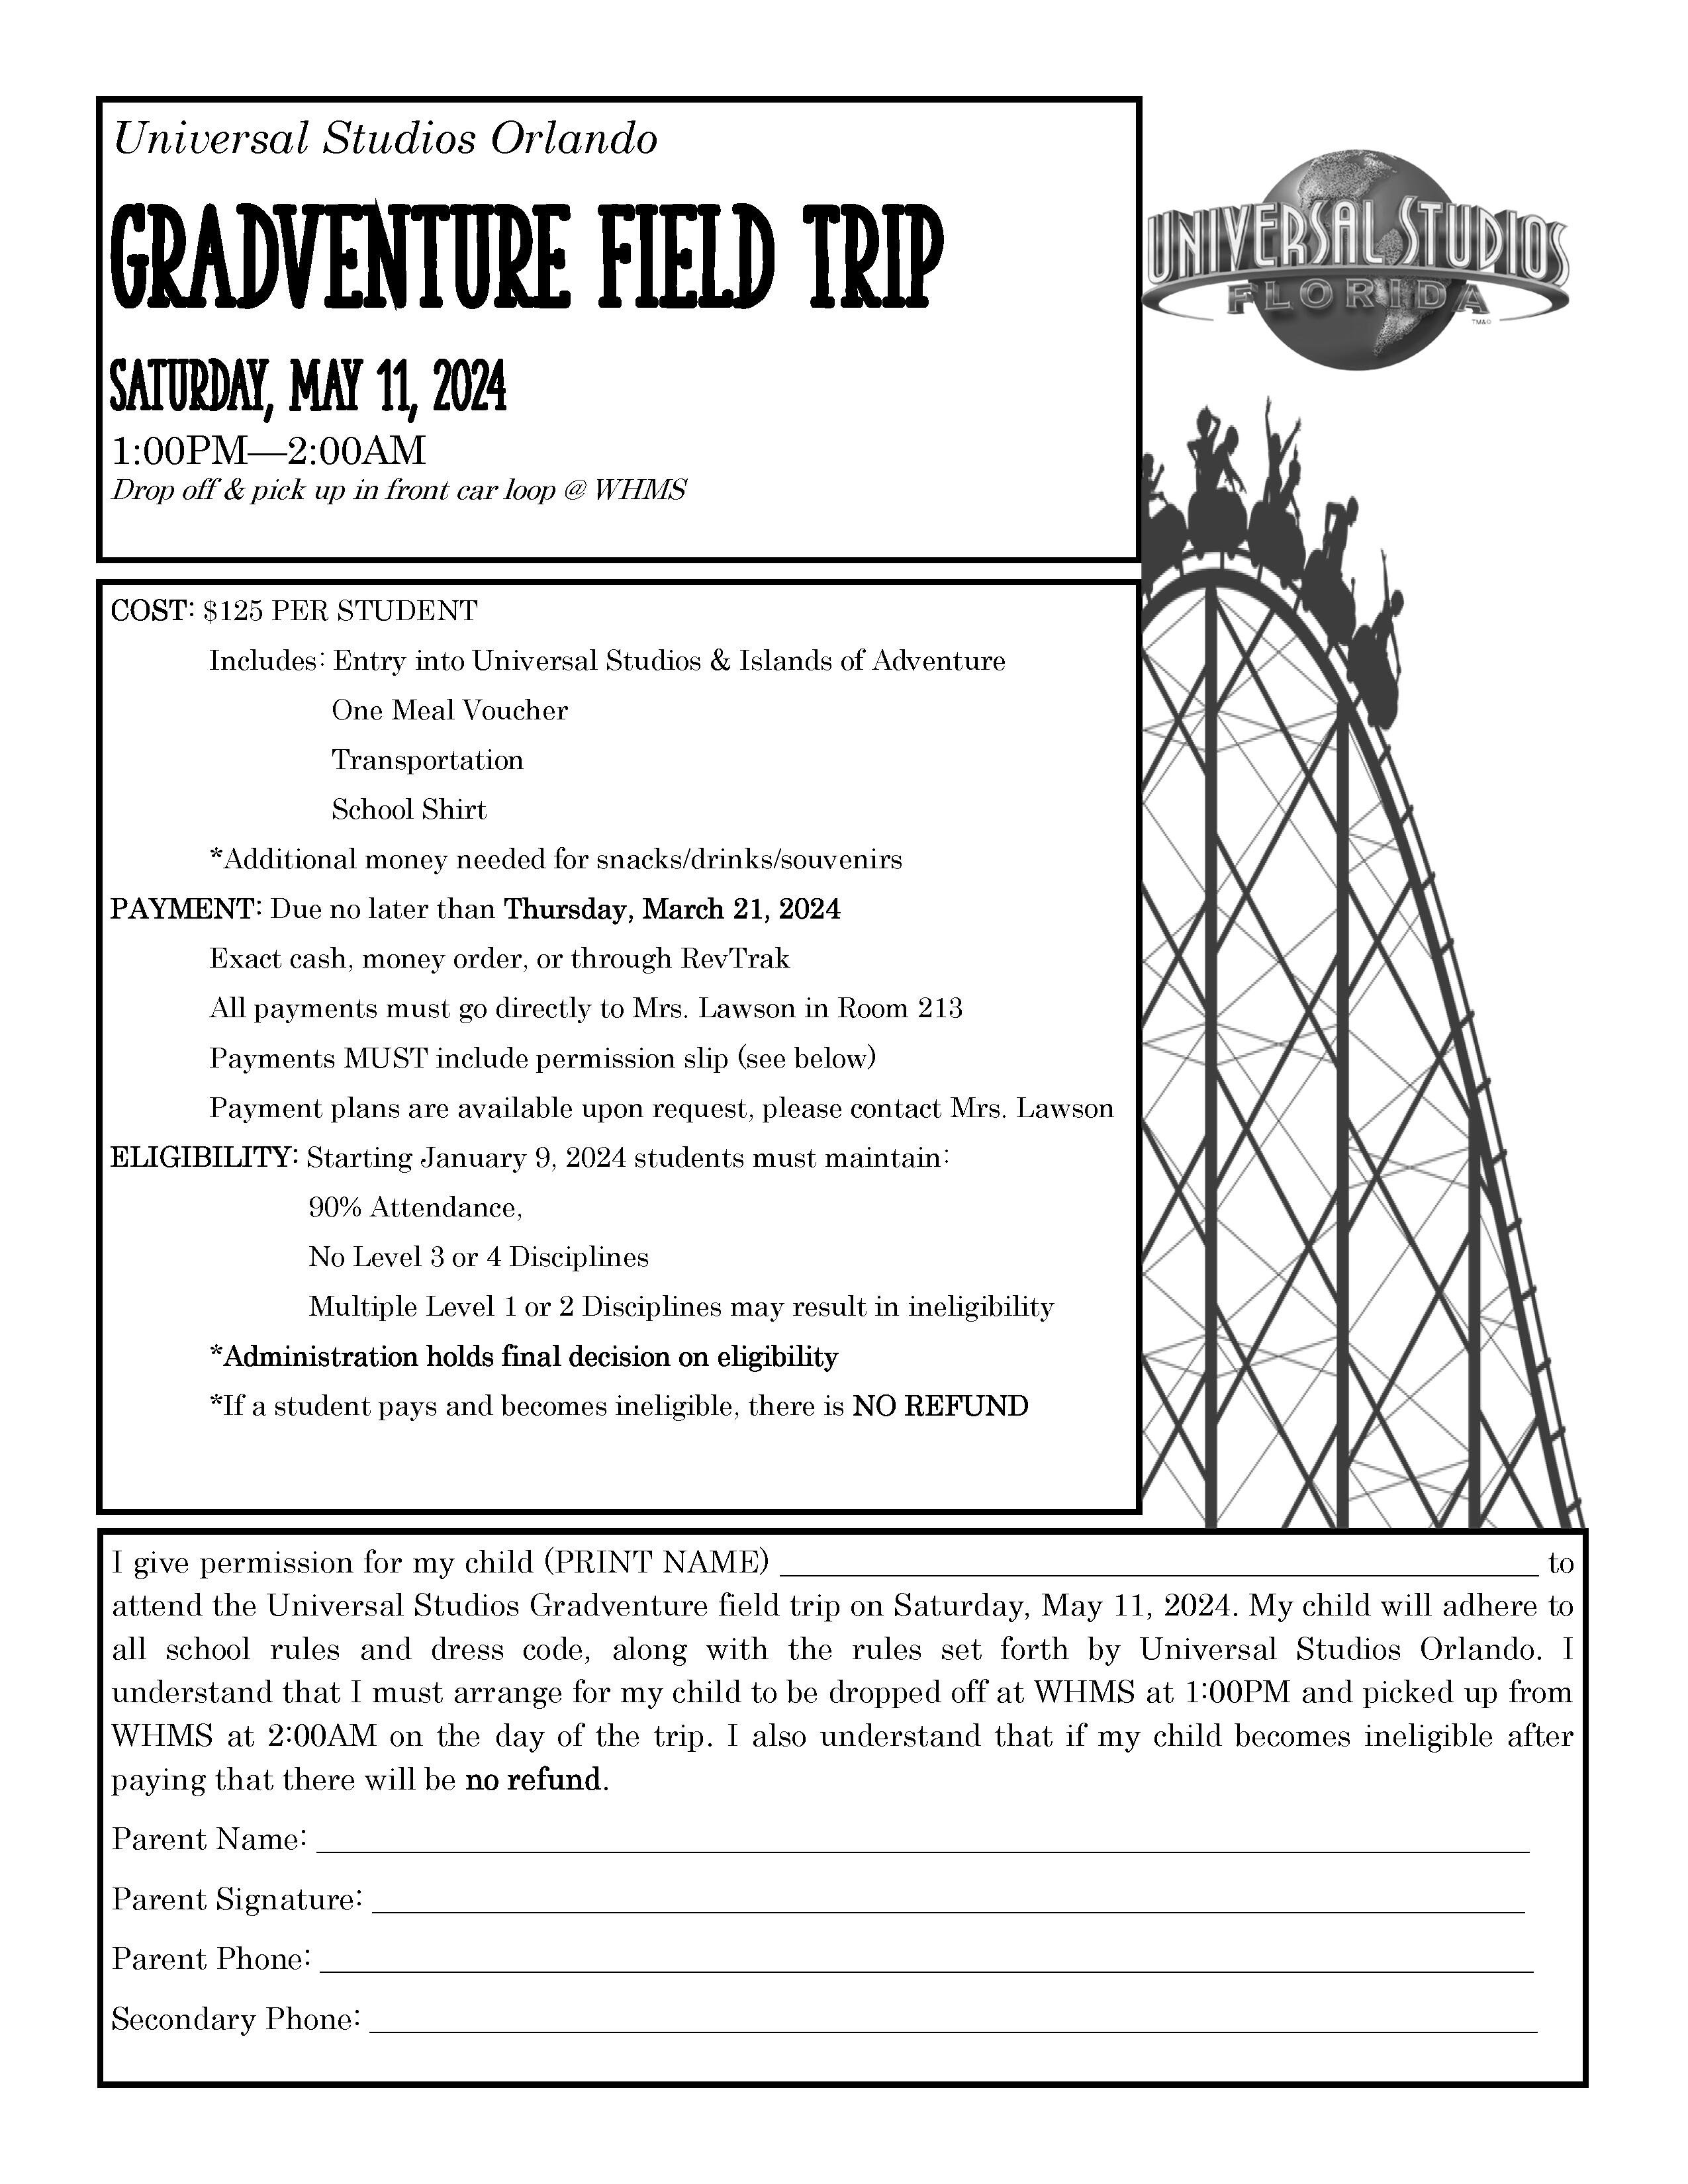 WHMS 8th Grade Universal Studios Gradventure Field Trip 2024 Permission Slip